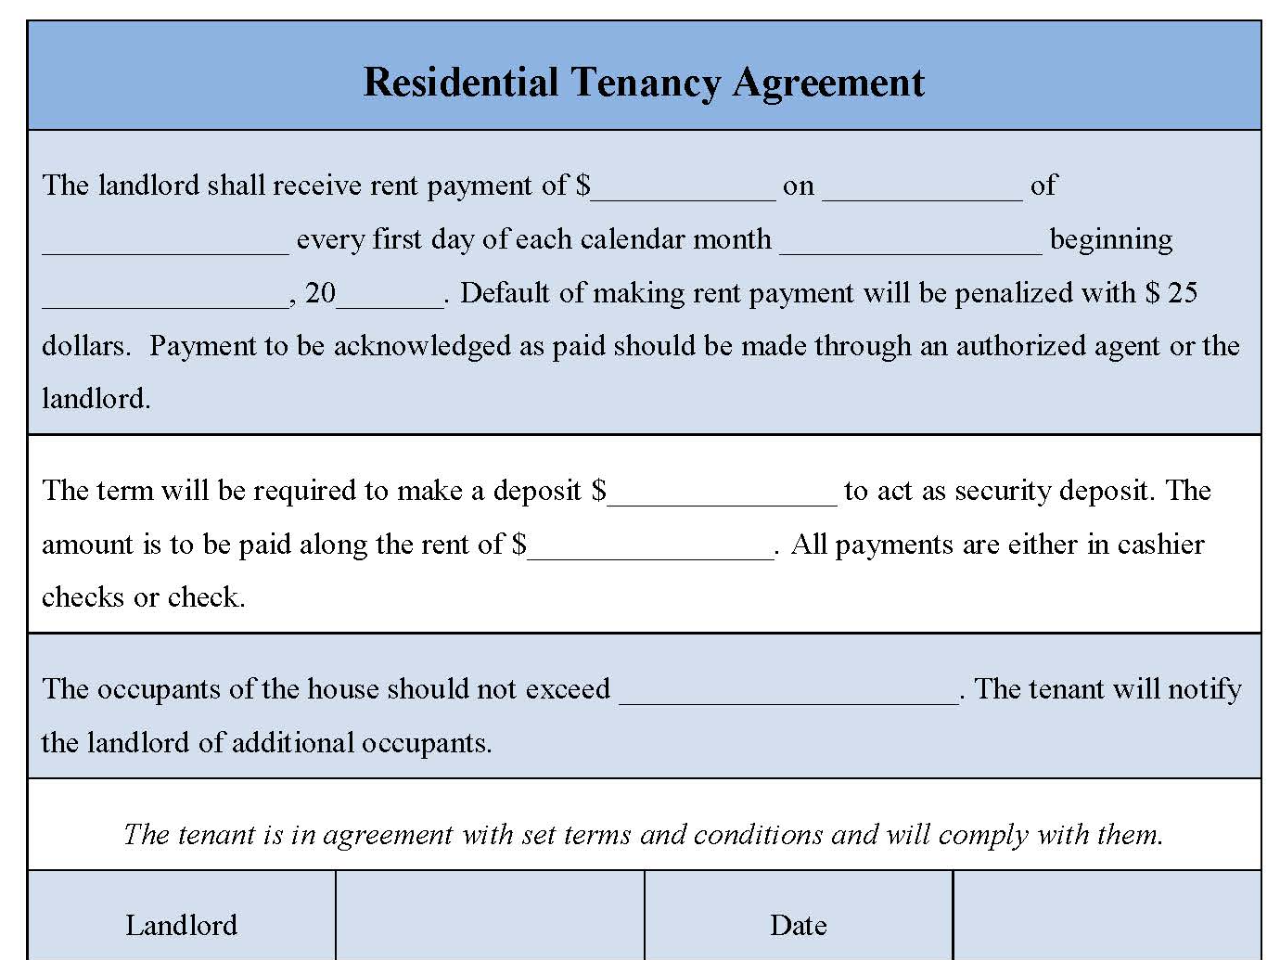 Residential Tenancy Agreement Form